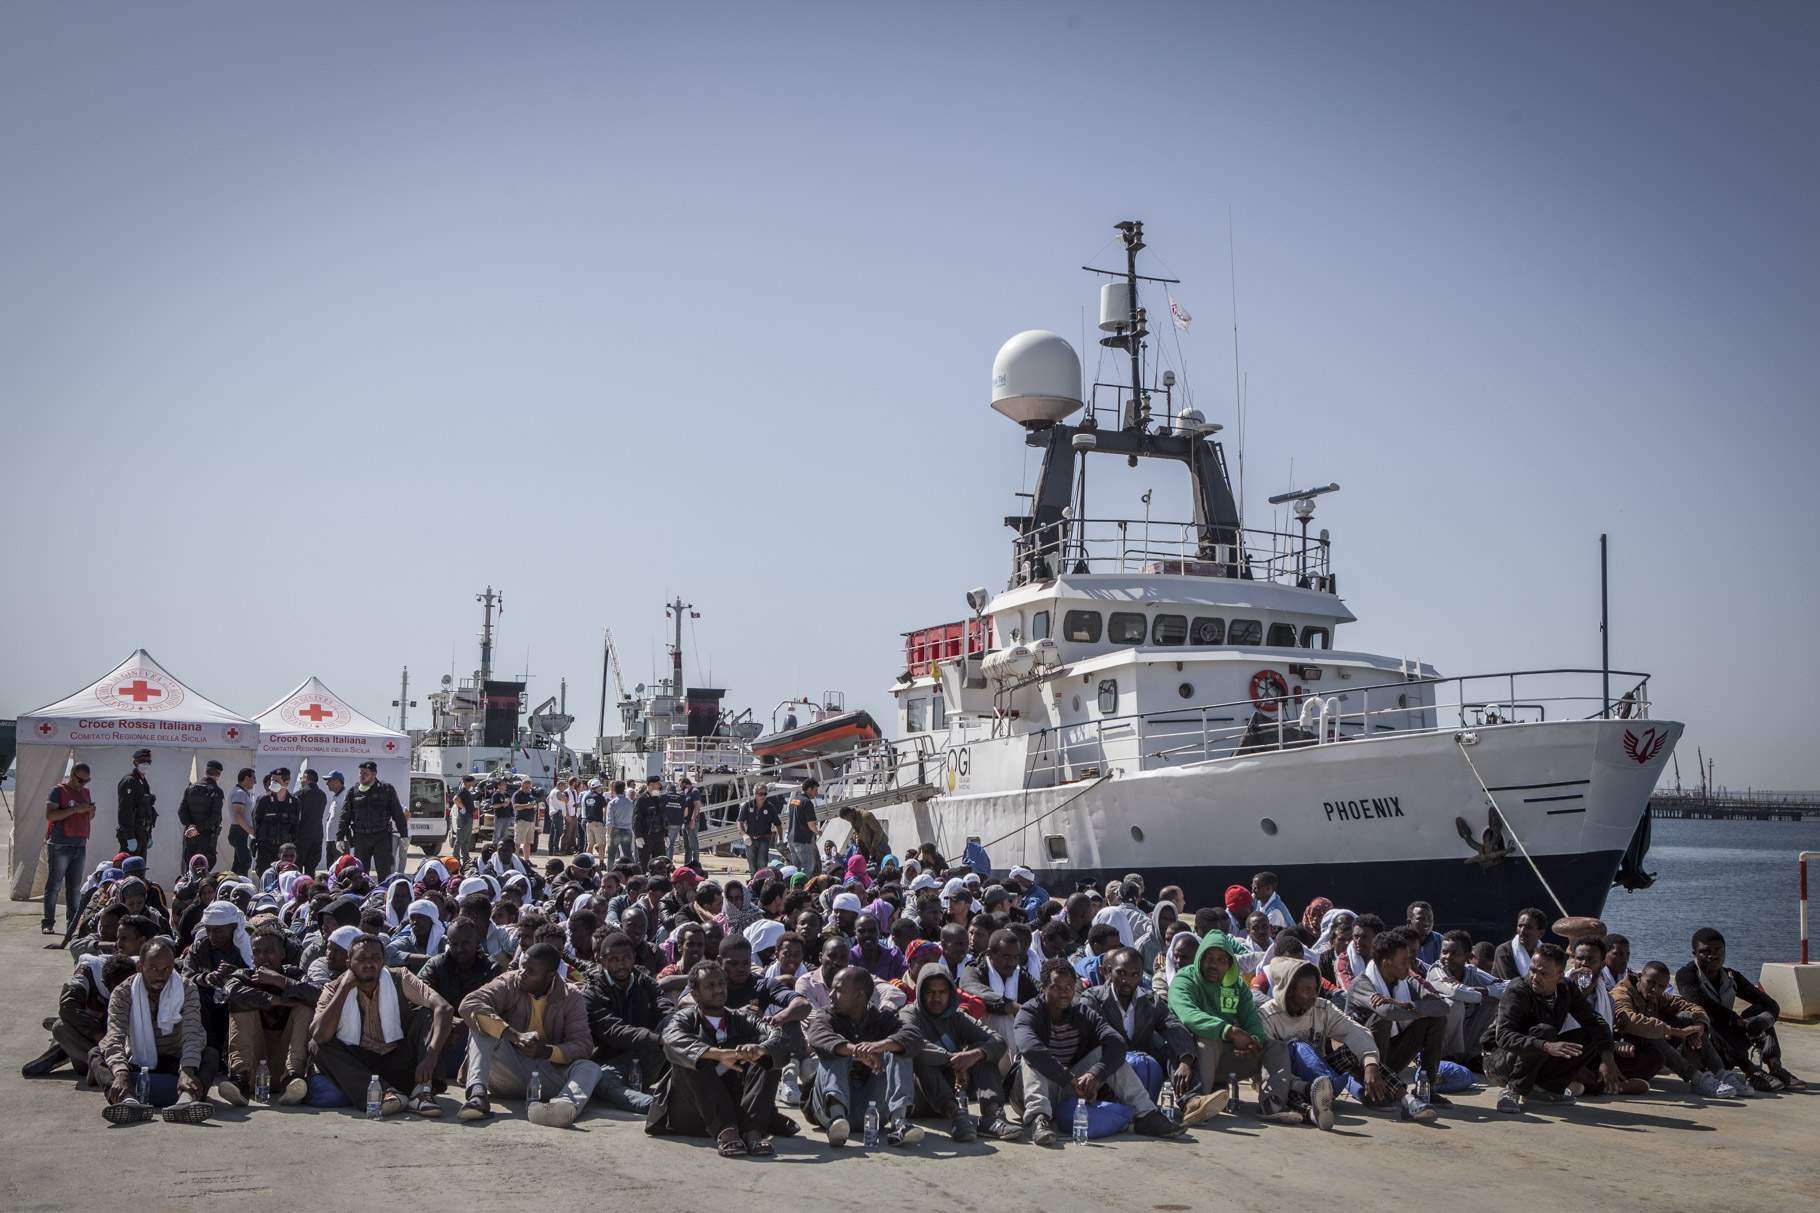 Migrant rescues in the Mediterranean sea